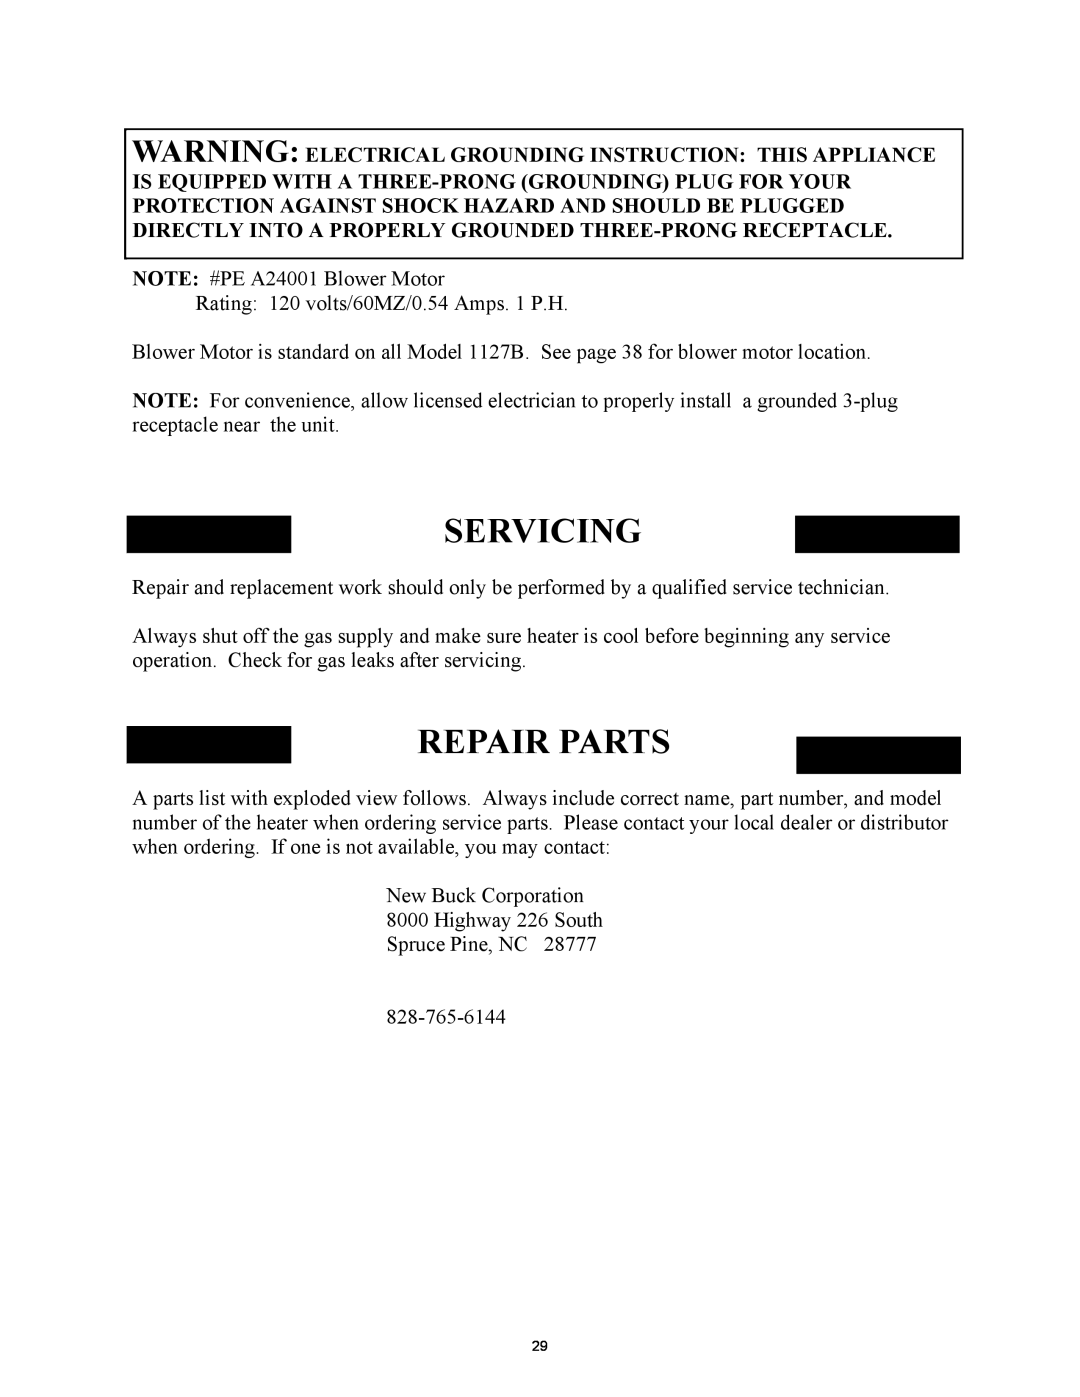 New Buck Corporation 1127B manual Servicing, Repair Parts 